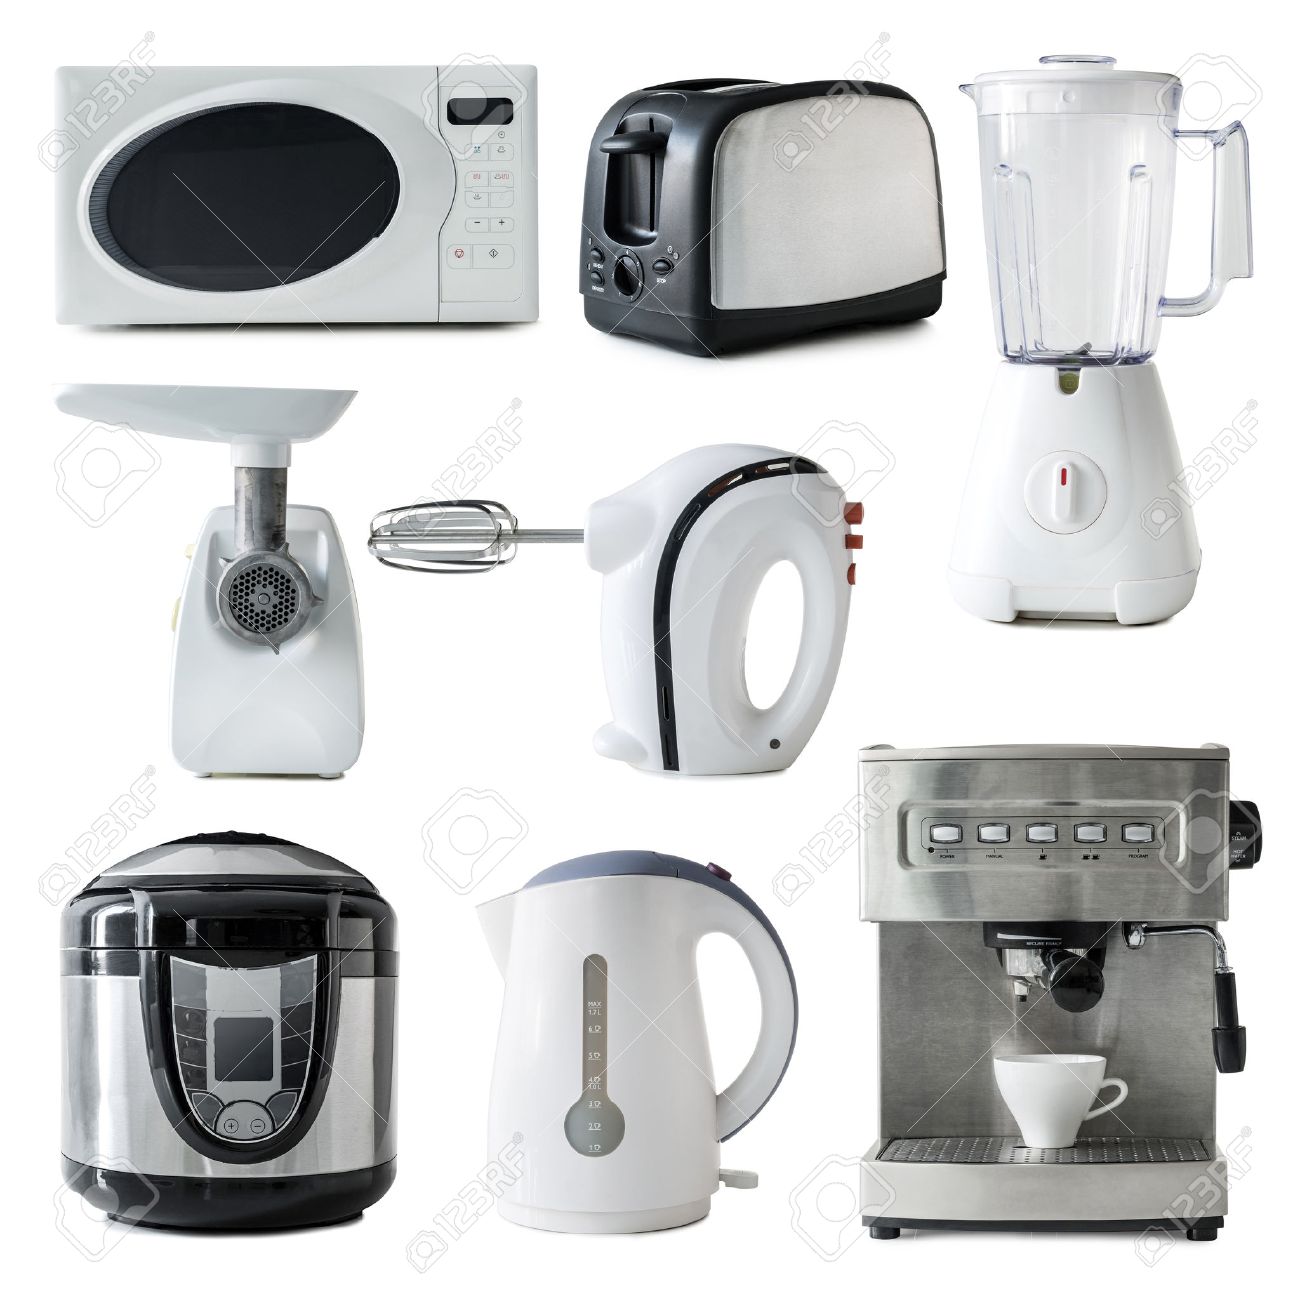 Electric blender, kitchen appliances, small home appliances